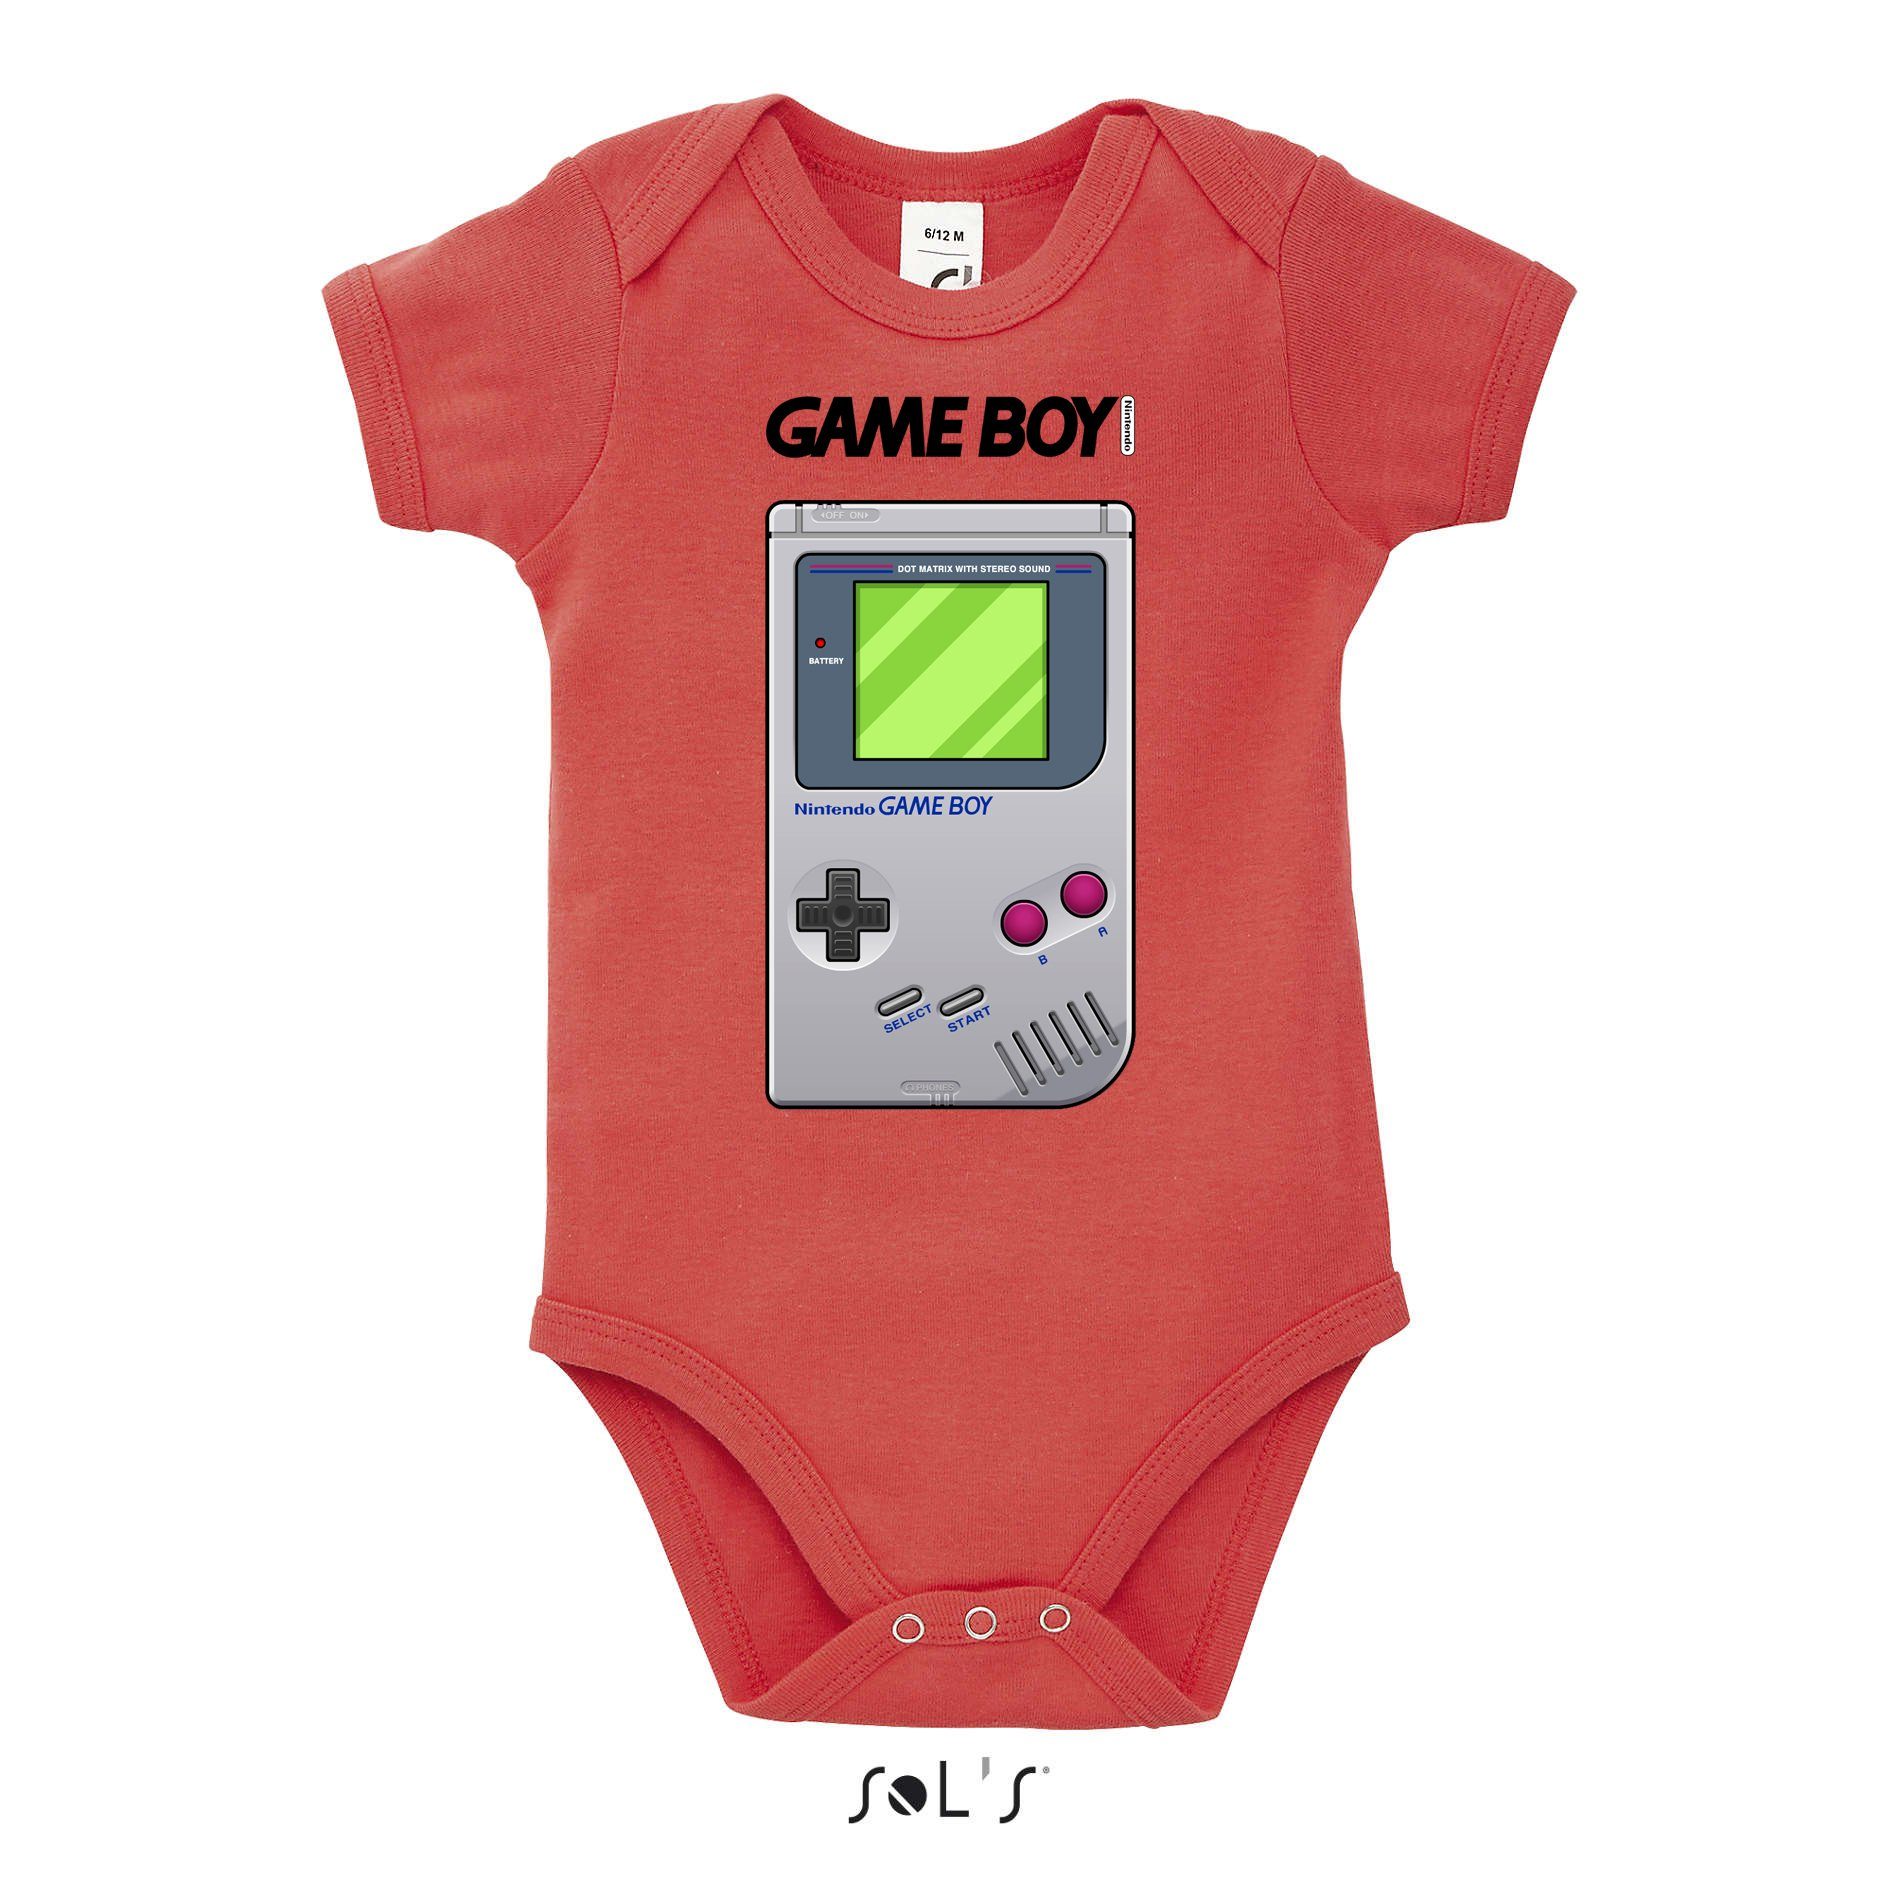 & Gamer Rot Baby Nintendo Logo Retro Brownie Strampler Kinder Boy Game Konsole Blondie